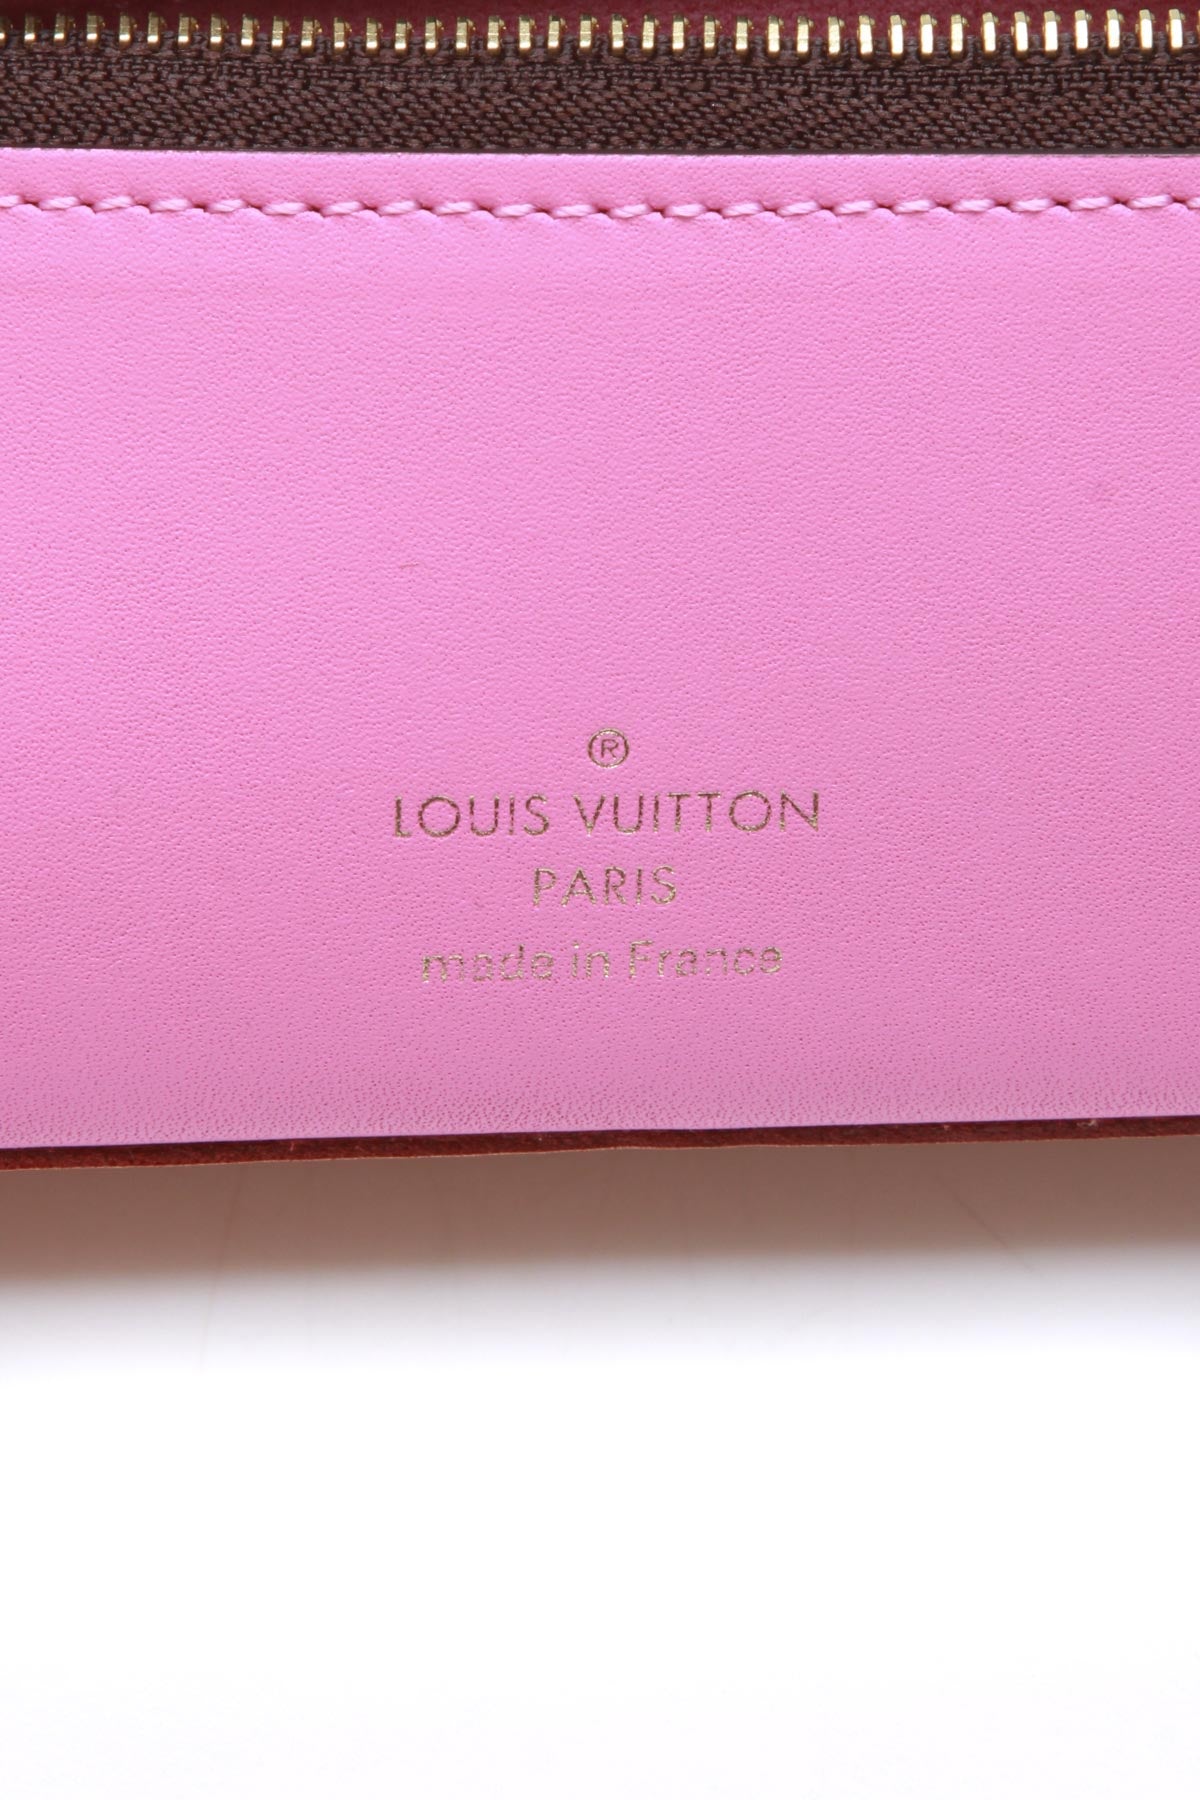 Louis Vuitton 2019 Christmas Pencil Pouch - Couture USA